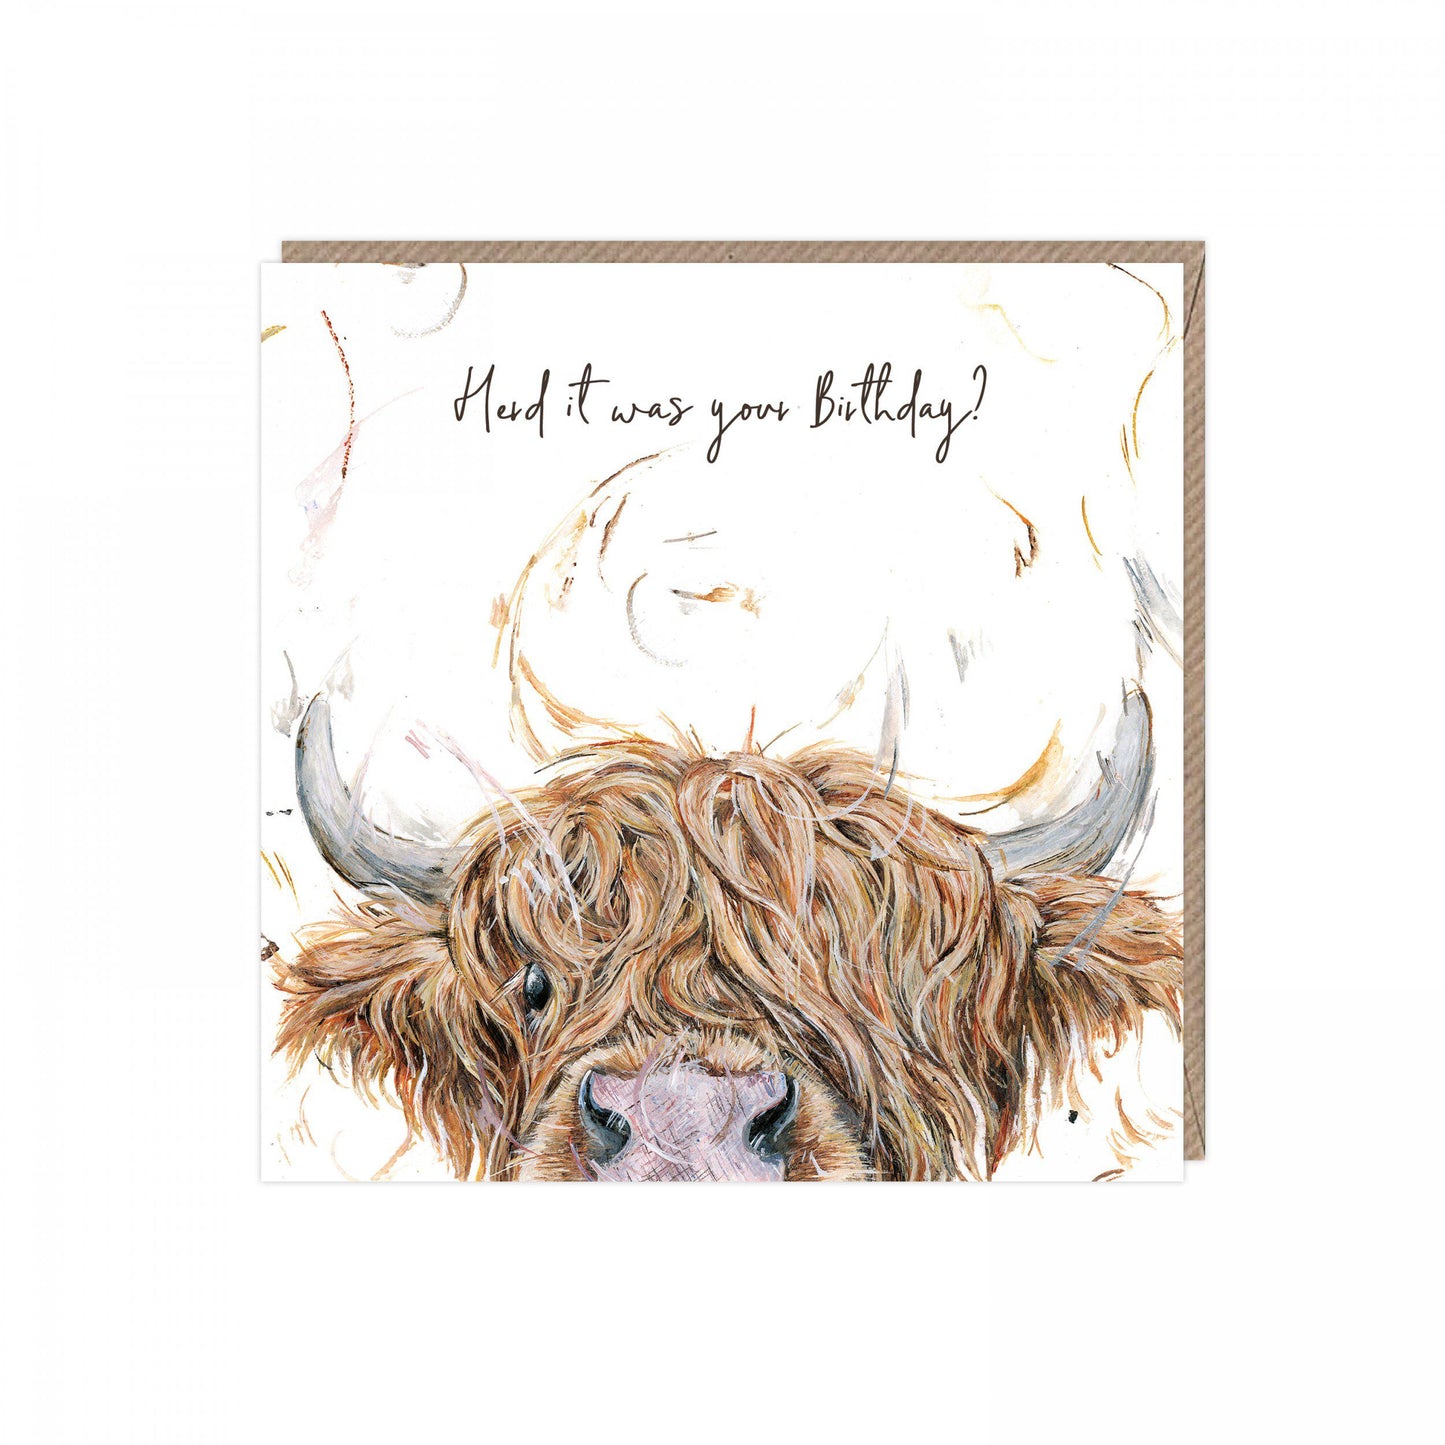 Peek a moo, highland cow birthday card